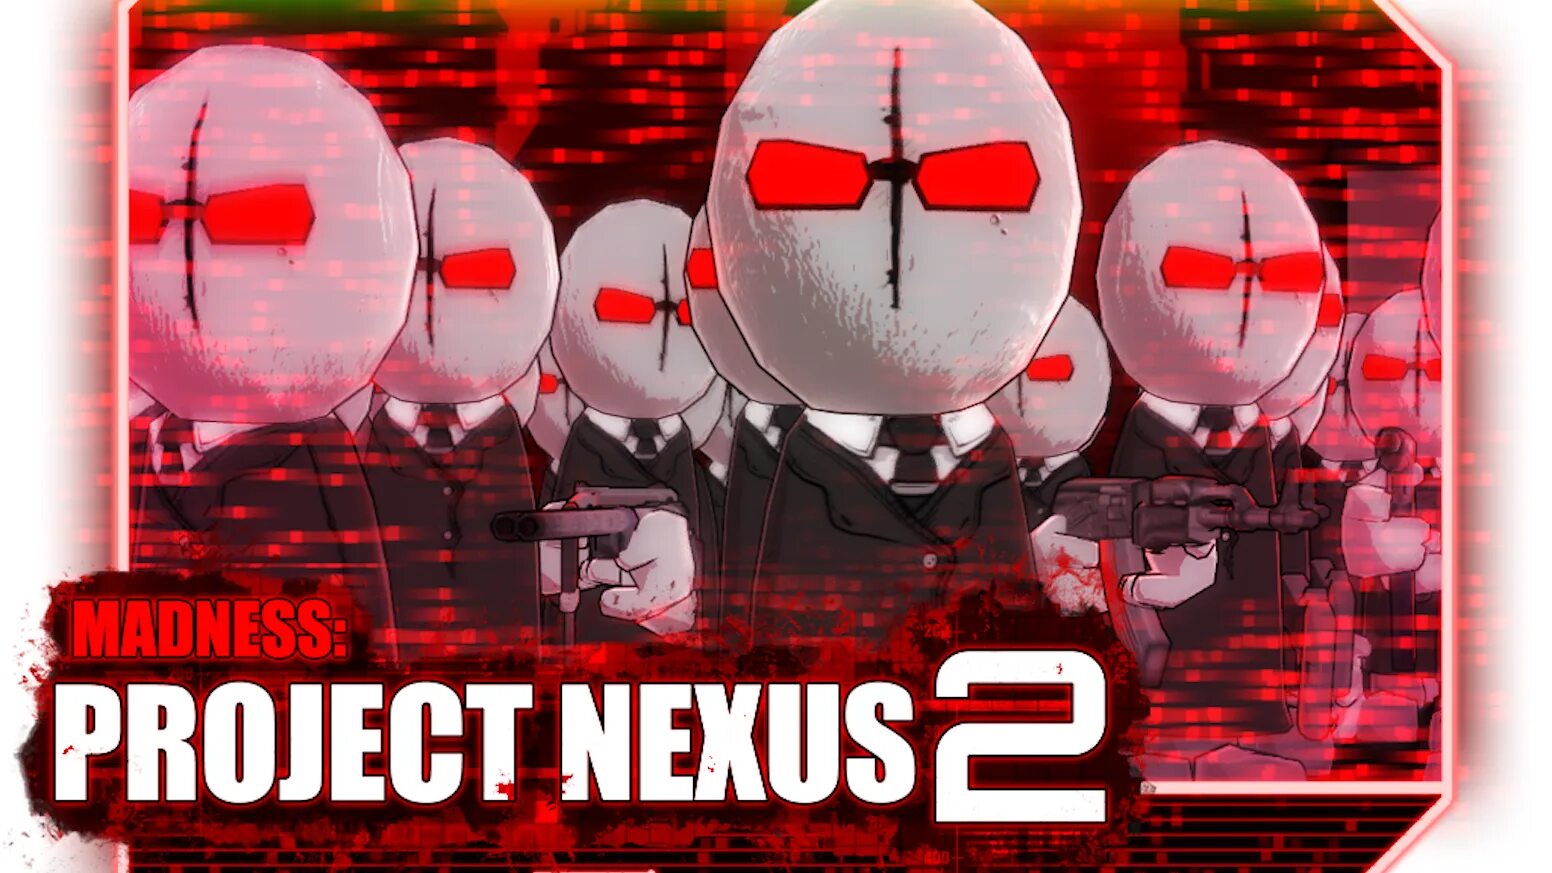 Virus total madness. Project Nexus. Маднесс комбат Проджект Нексус. Безумие проект Нексус. Madness Combat проект Нексус 2.